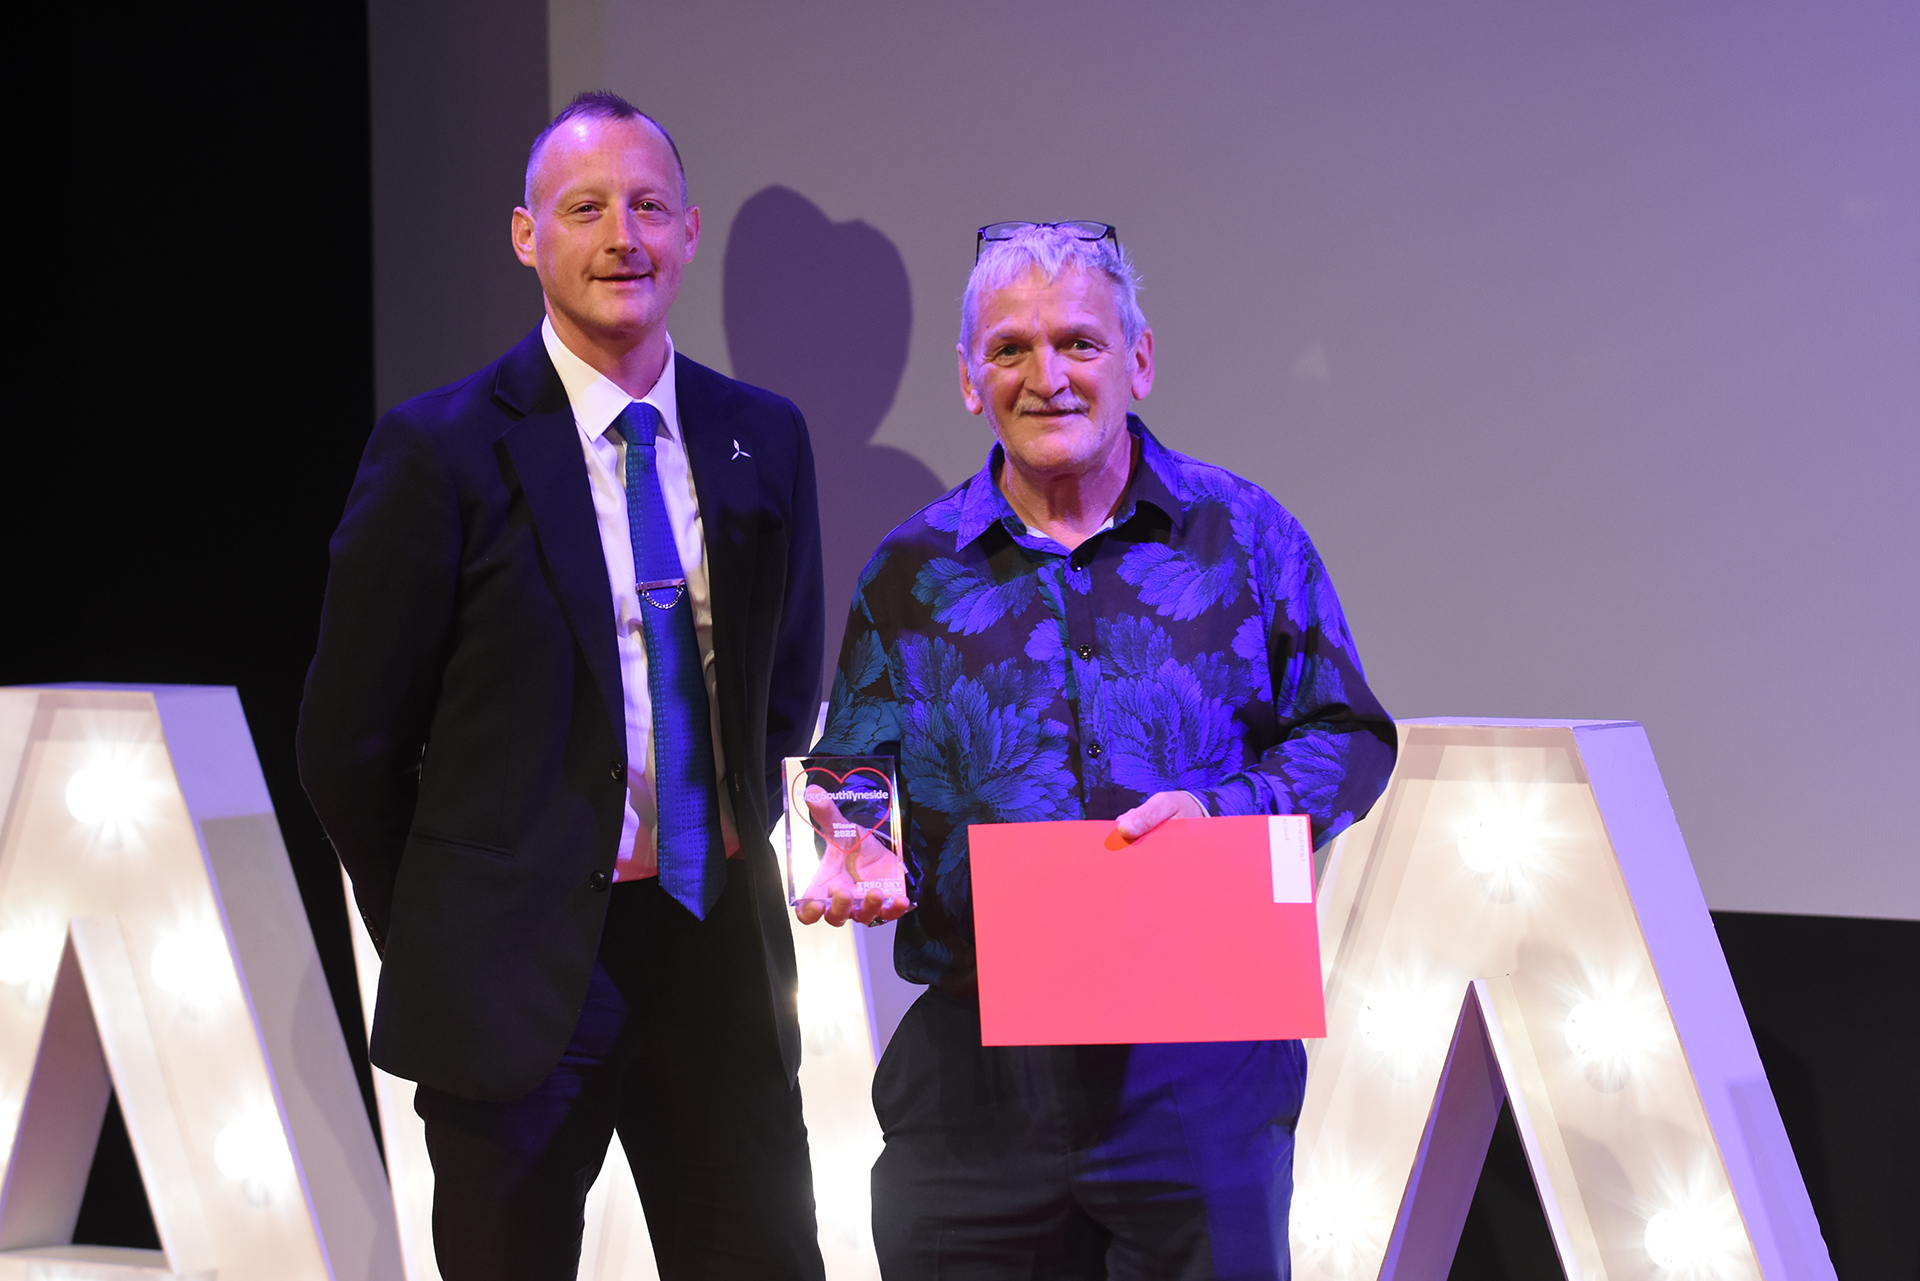 Winner John Stewart presented by Tim Nightingale, Equinor North East stakeholder manager